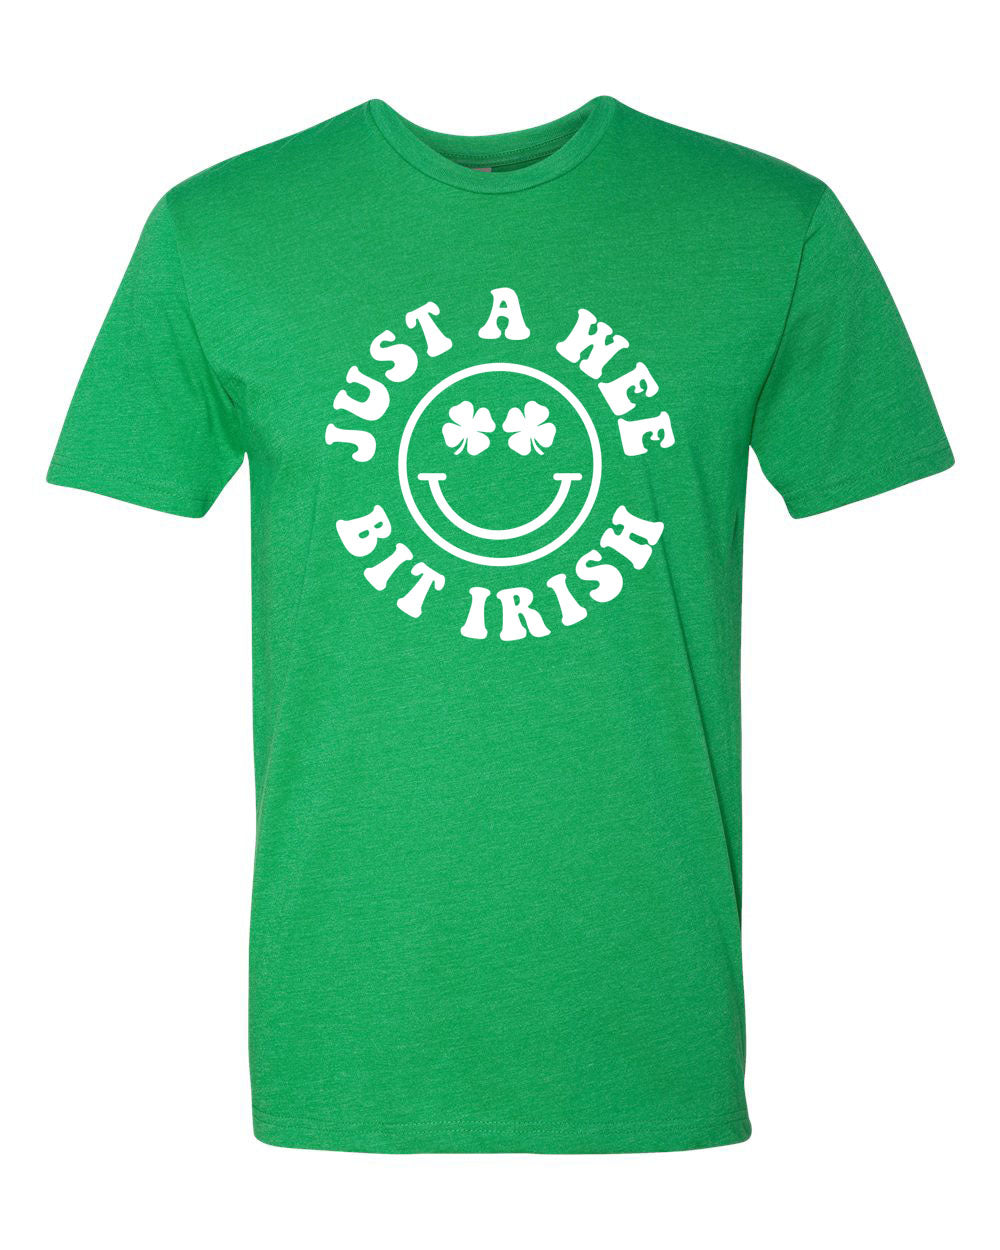 Just a Wee Bit Irish T-Shirt